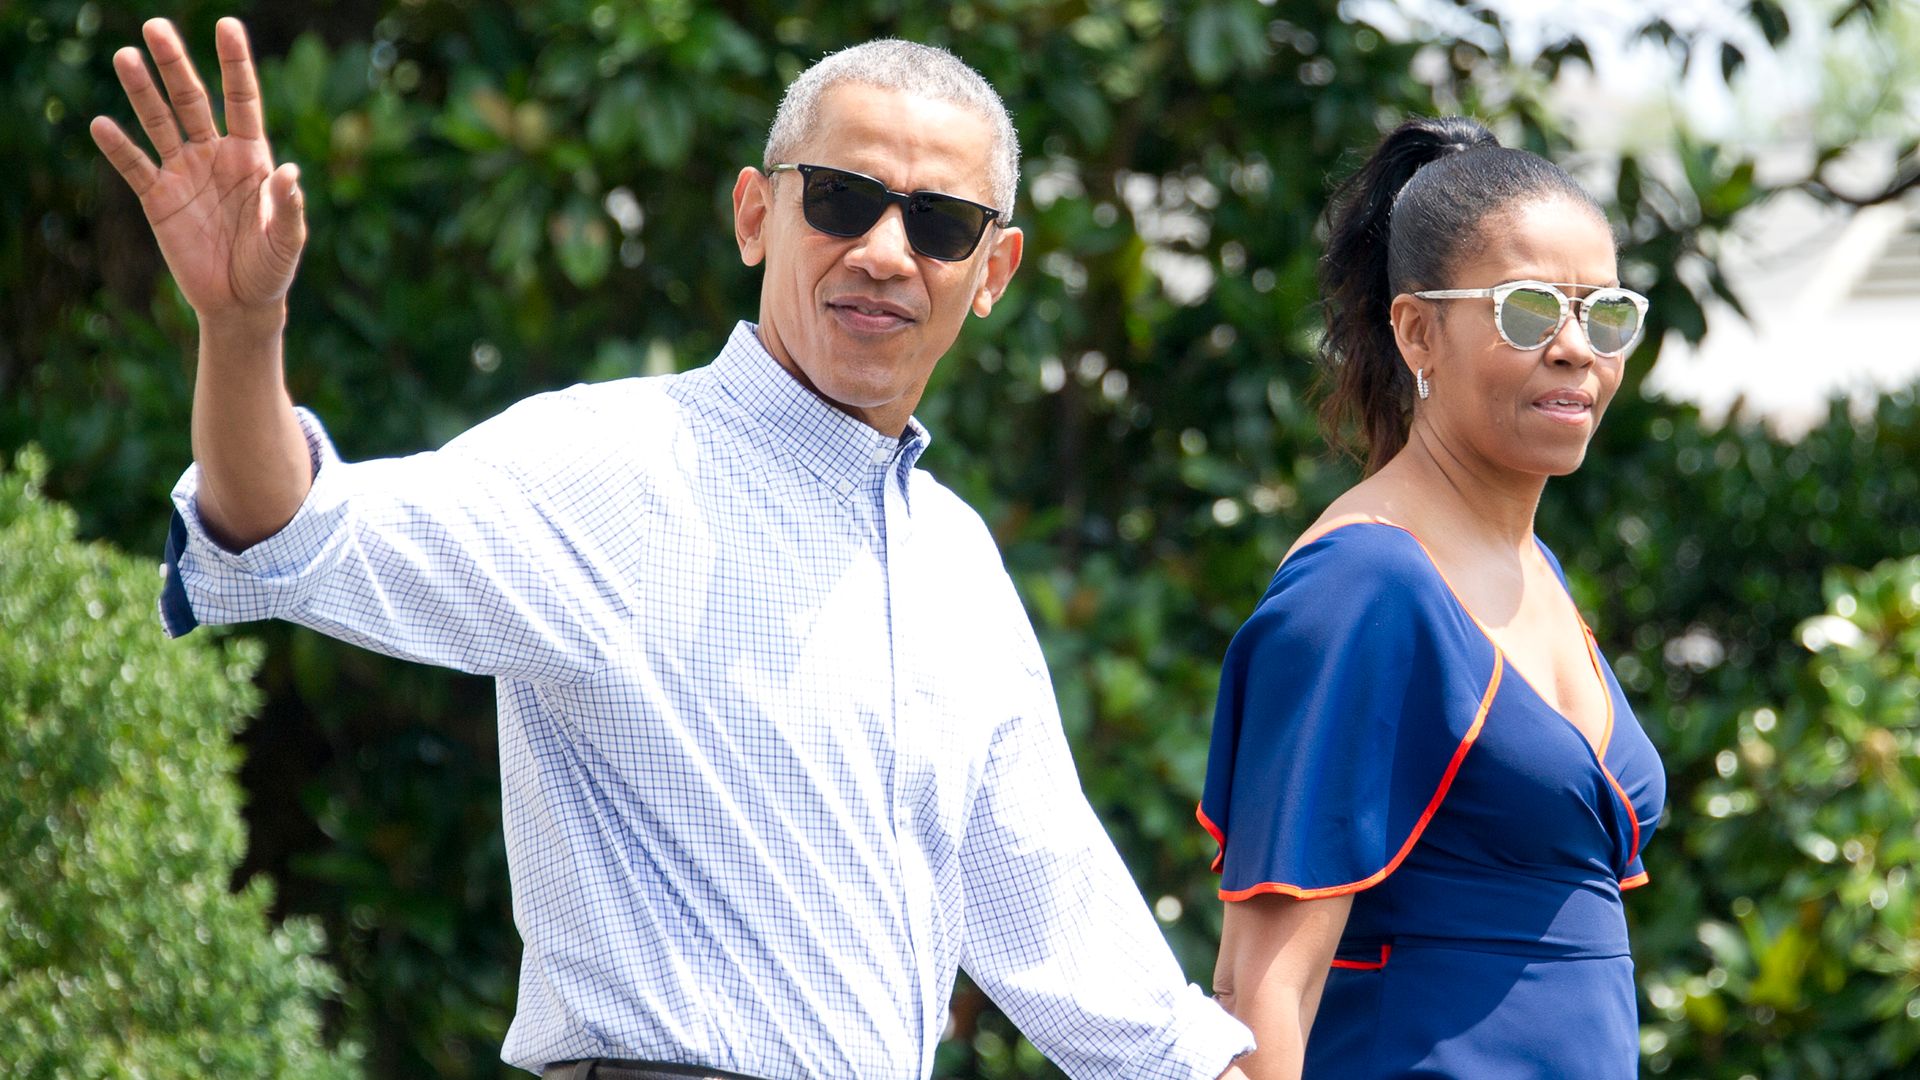 Michelle Obama and Barack Obama